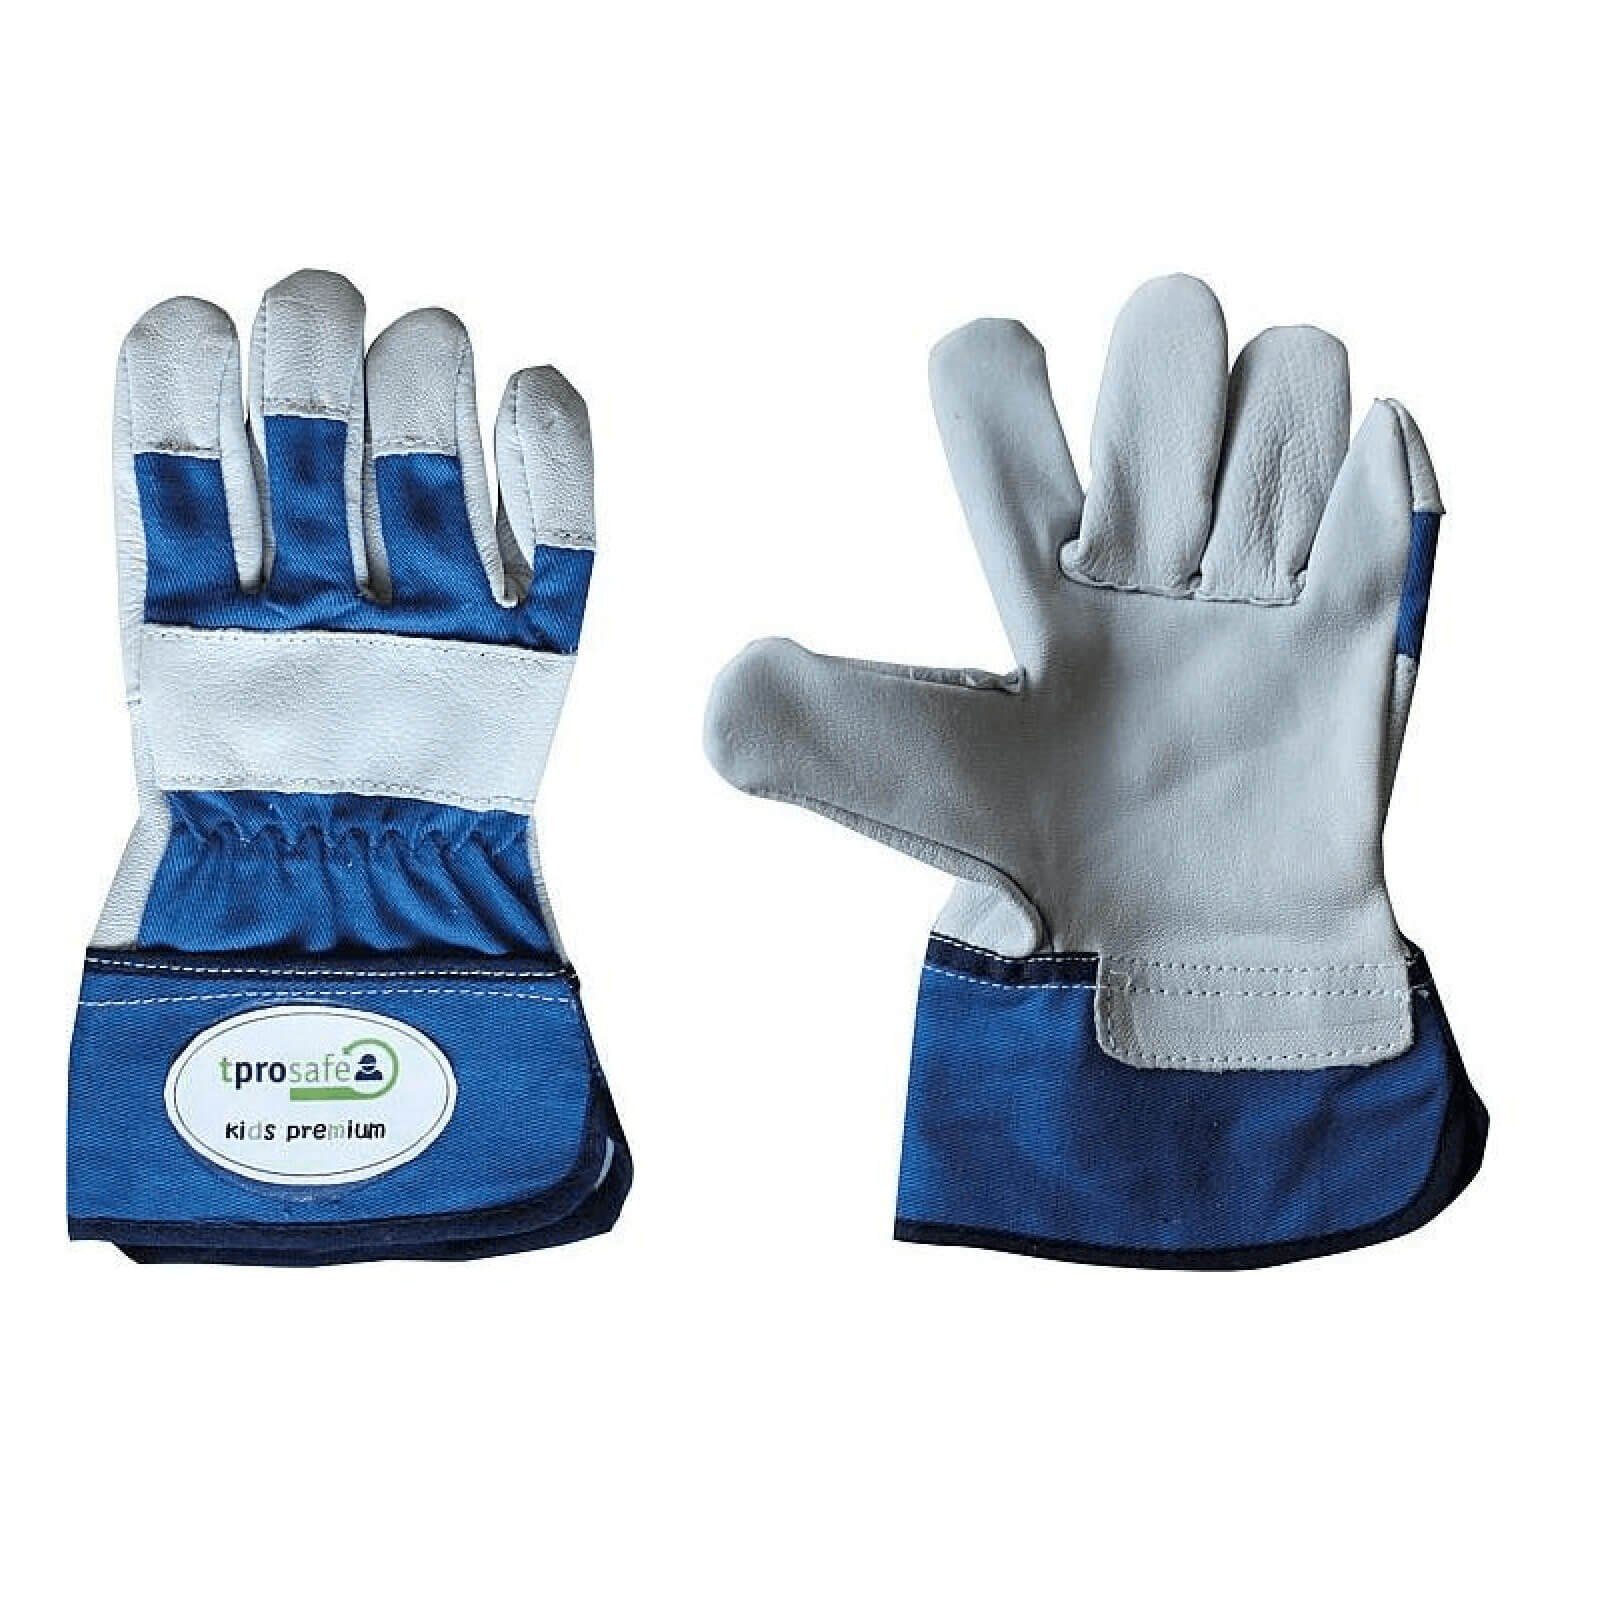 Kinderhandschuhe Leder-Arbeitshandschuhe Handschuhe tprosafe premium kleine blau-grau - tprosafe kids